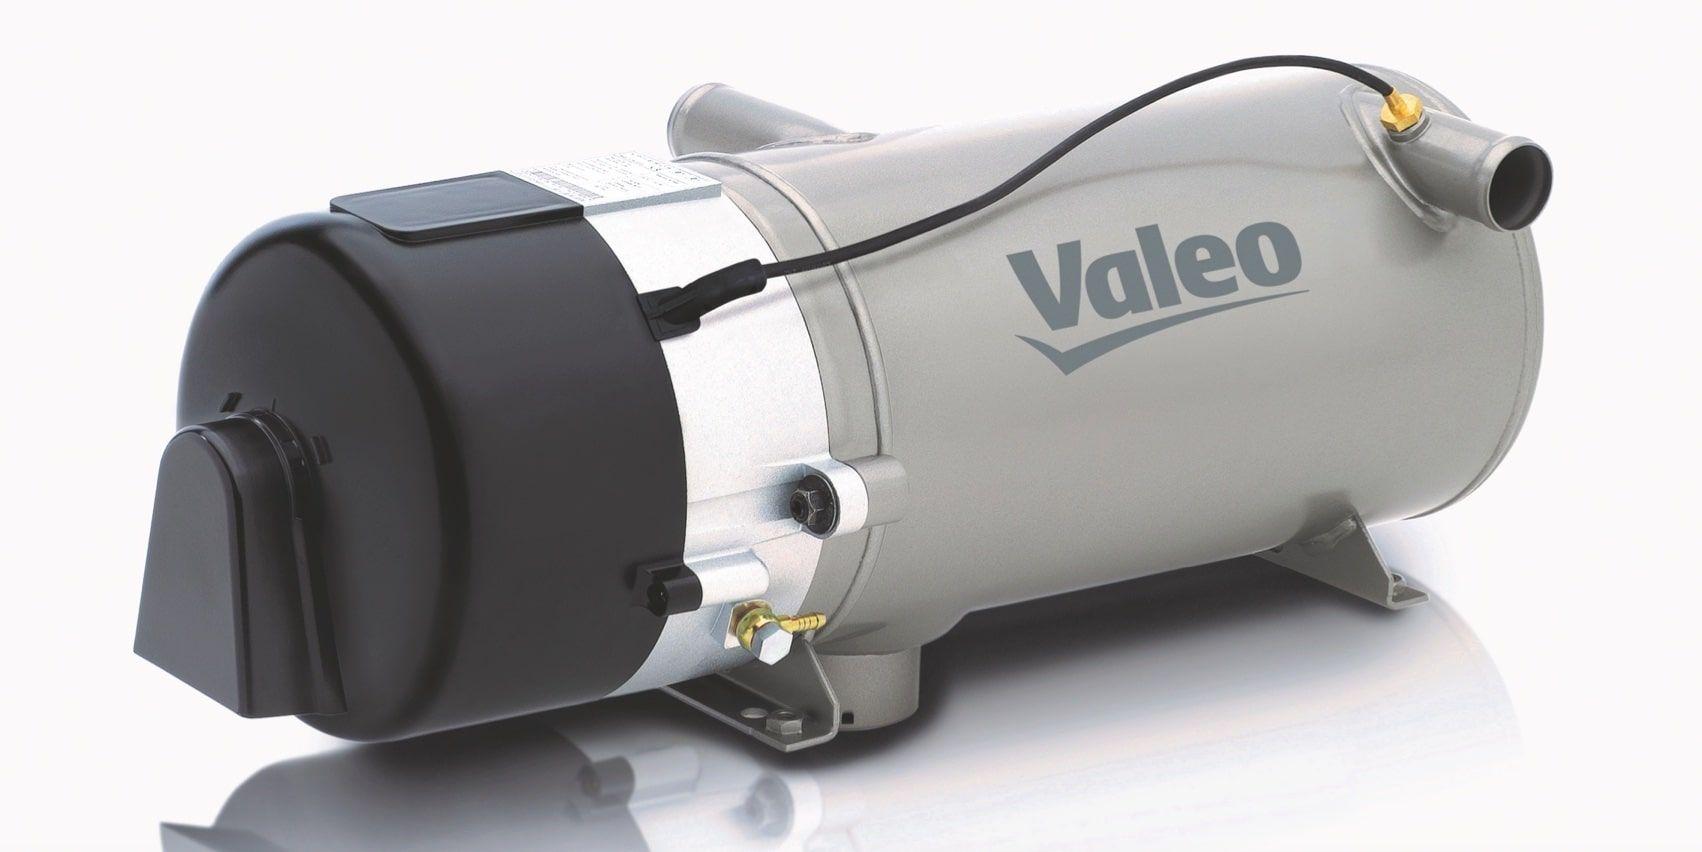 Thermo S dieselvarmere fra Valeo (tidligere Spheros)